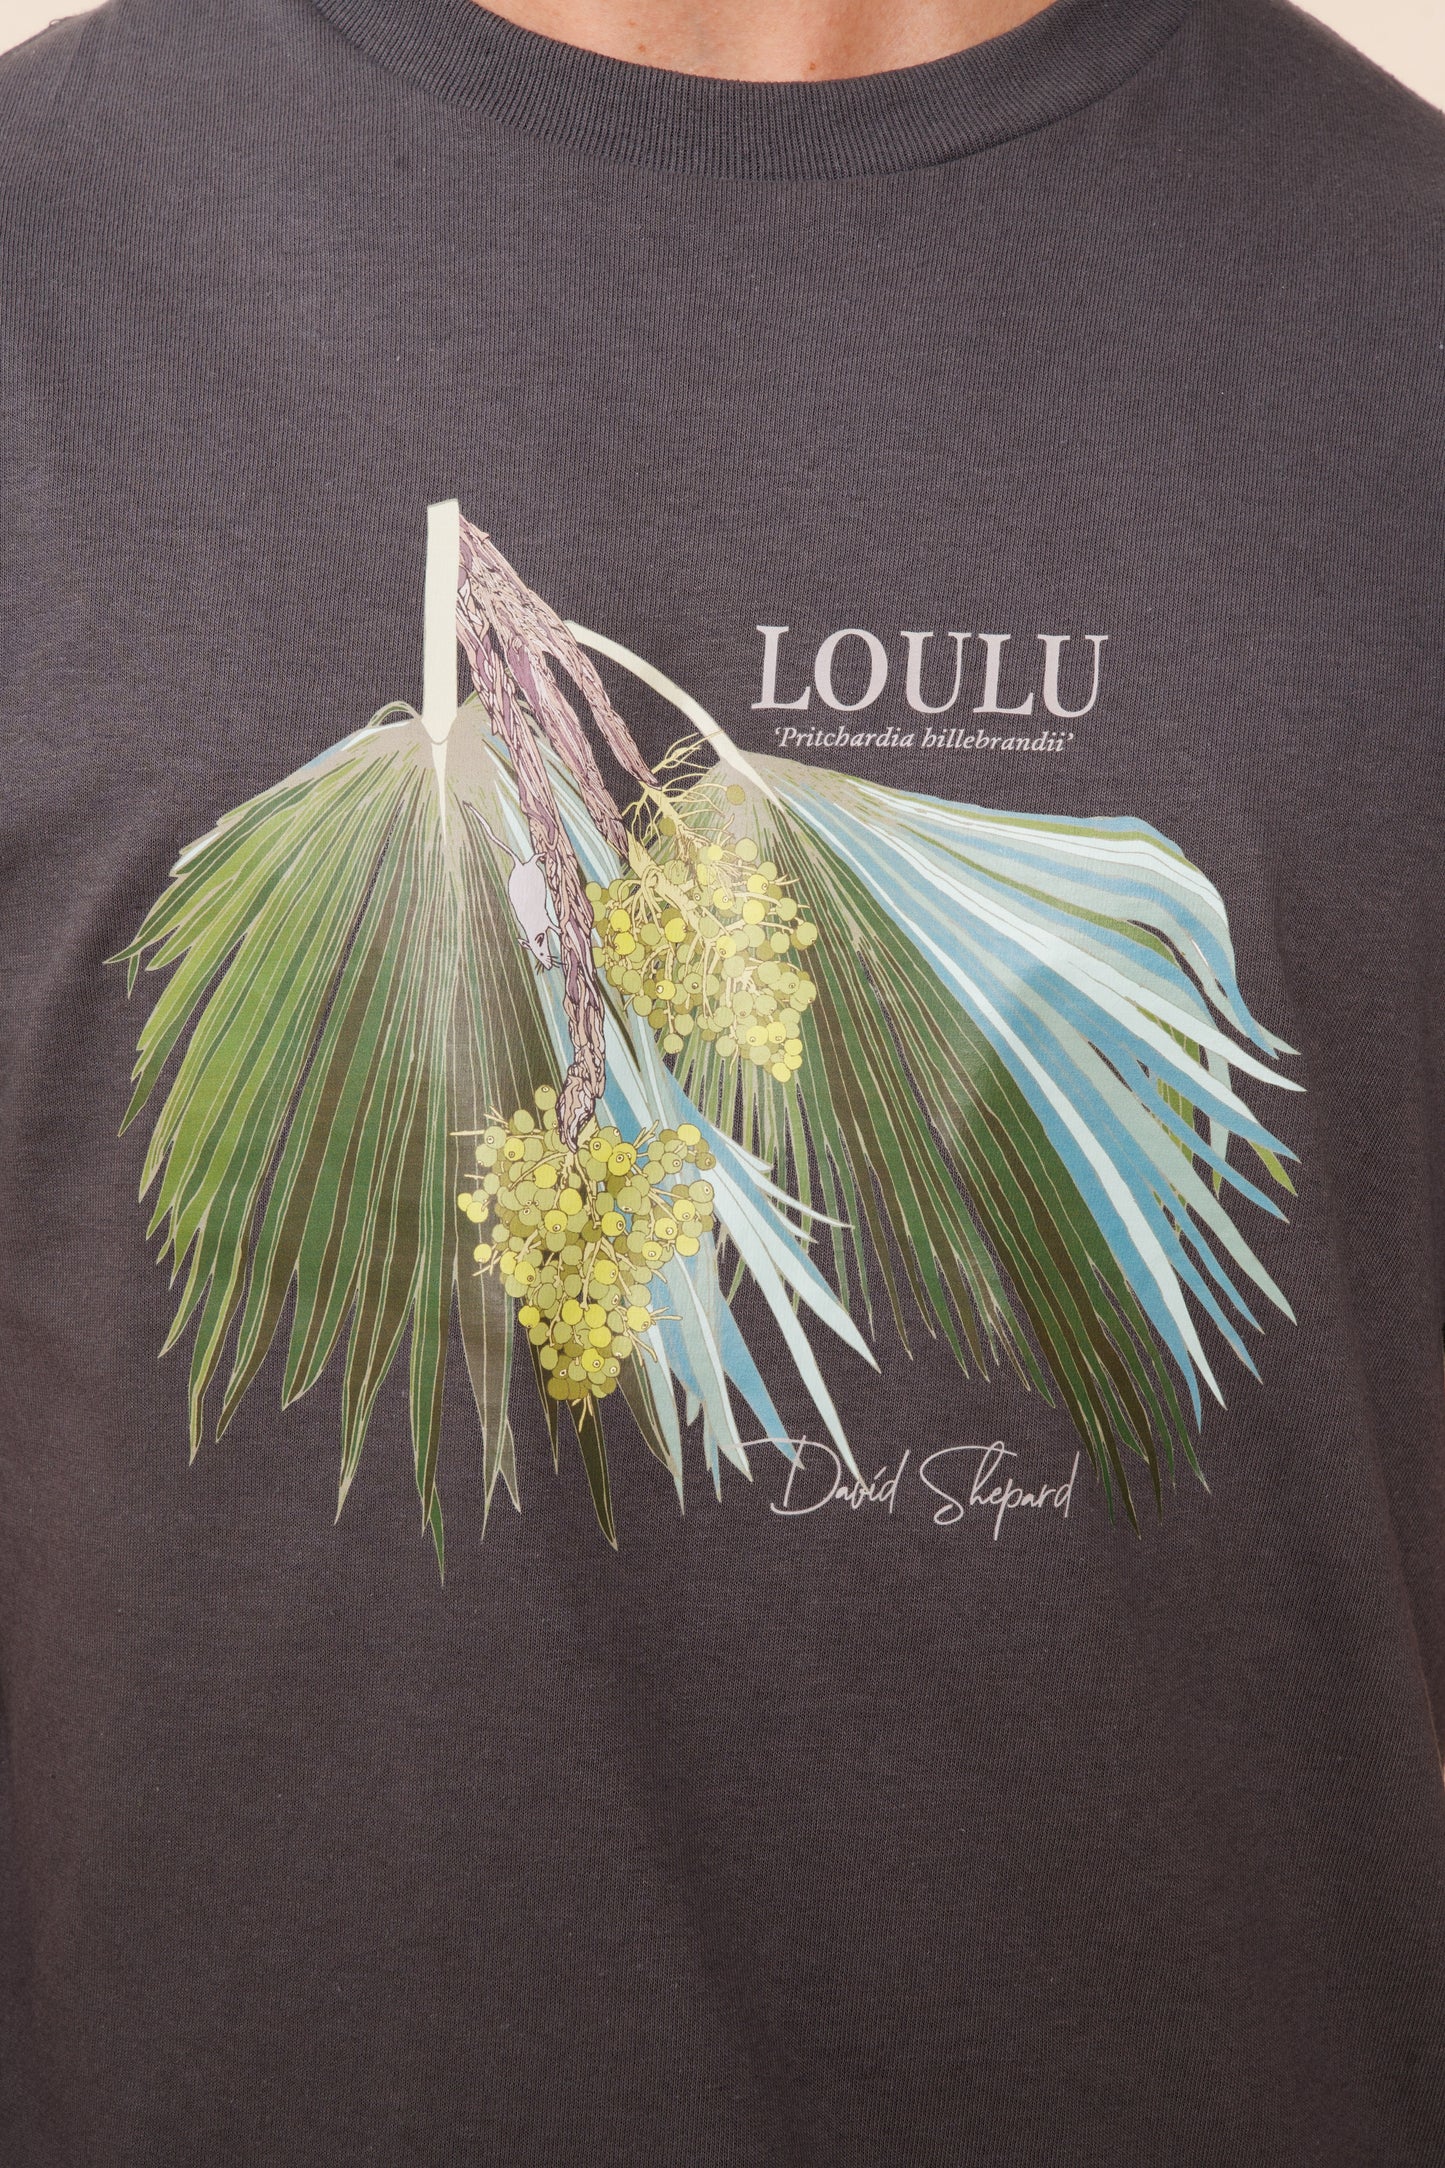 Loulu Charcoal T-Shirt